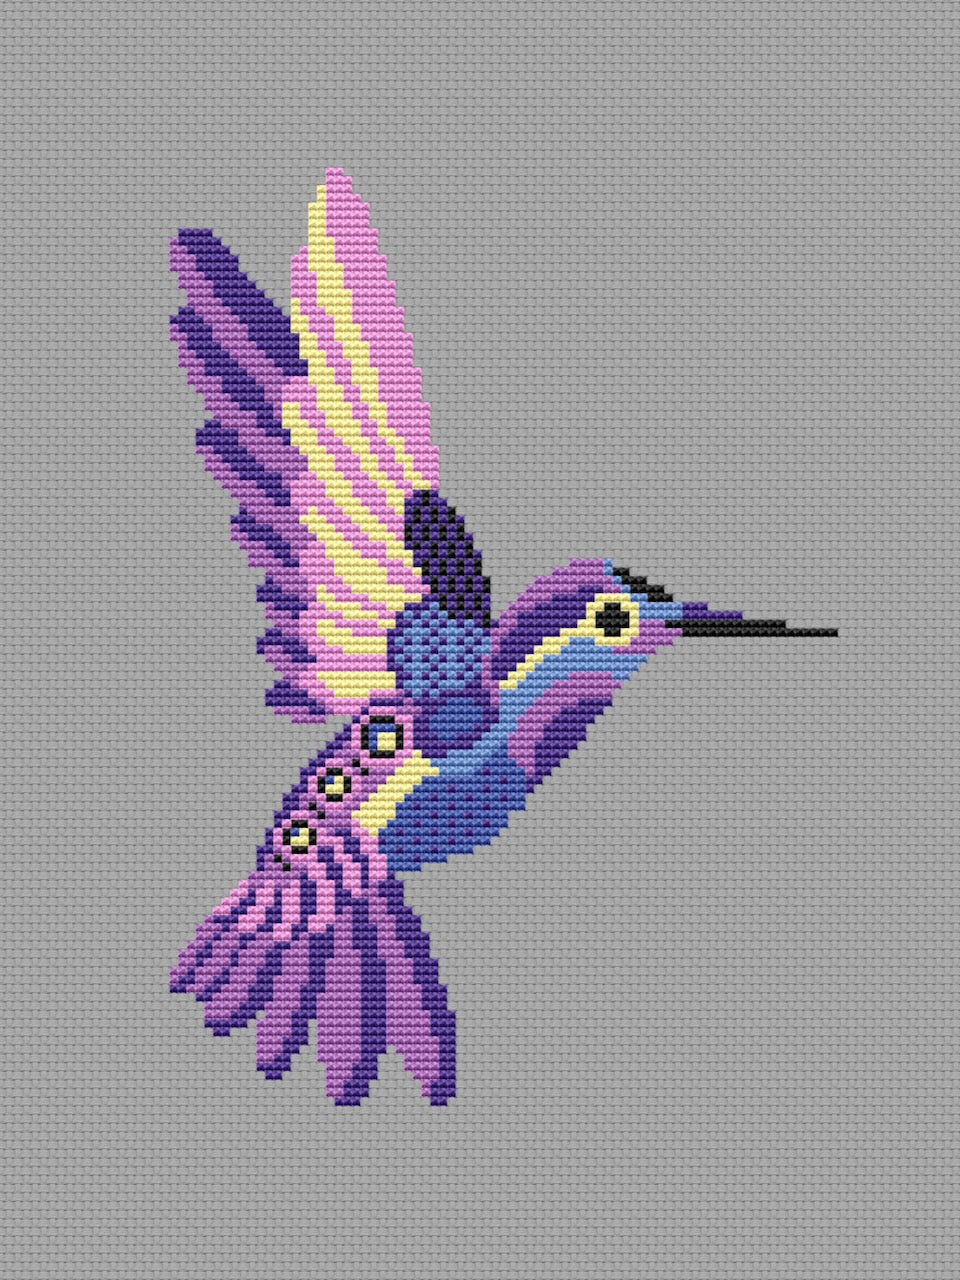 Hummingbird embroidery pattern